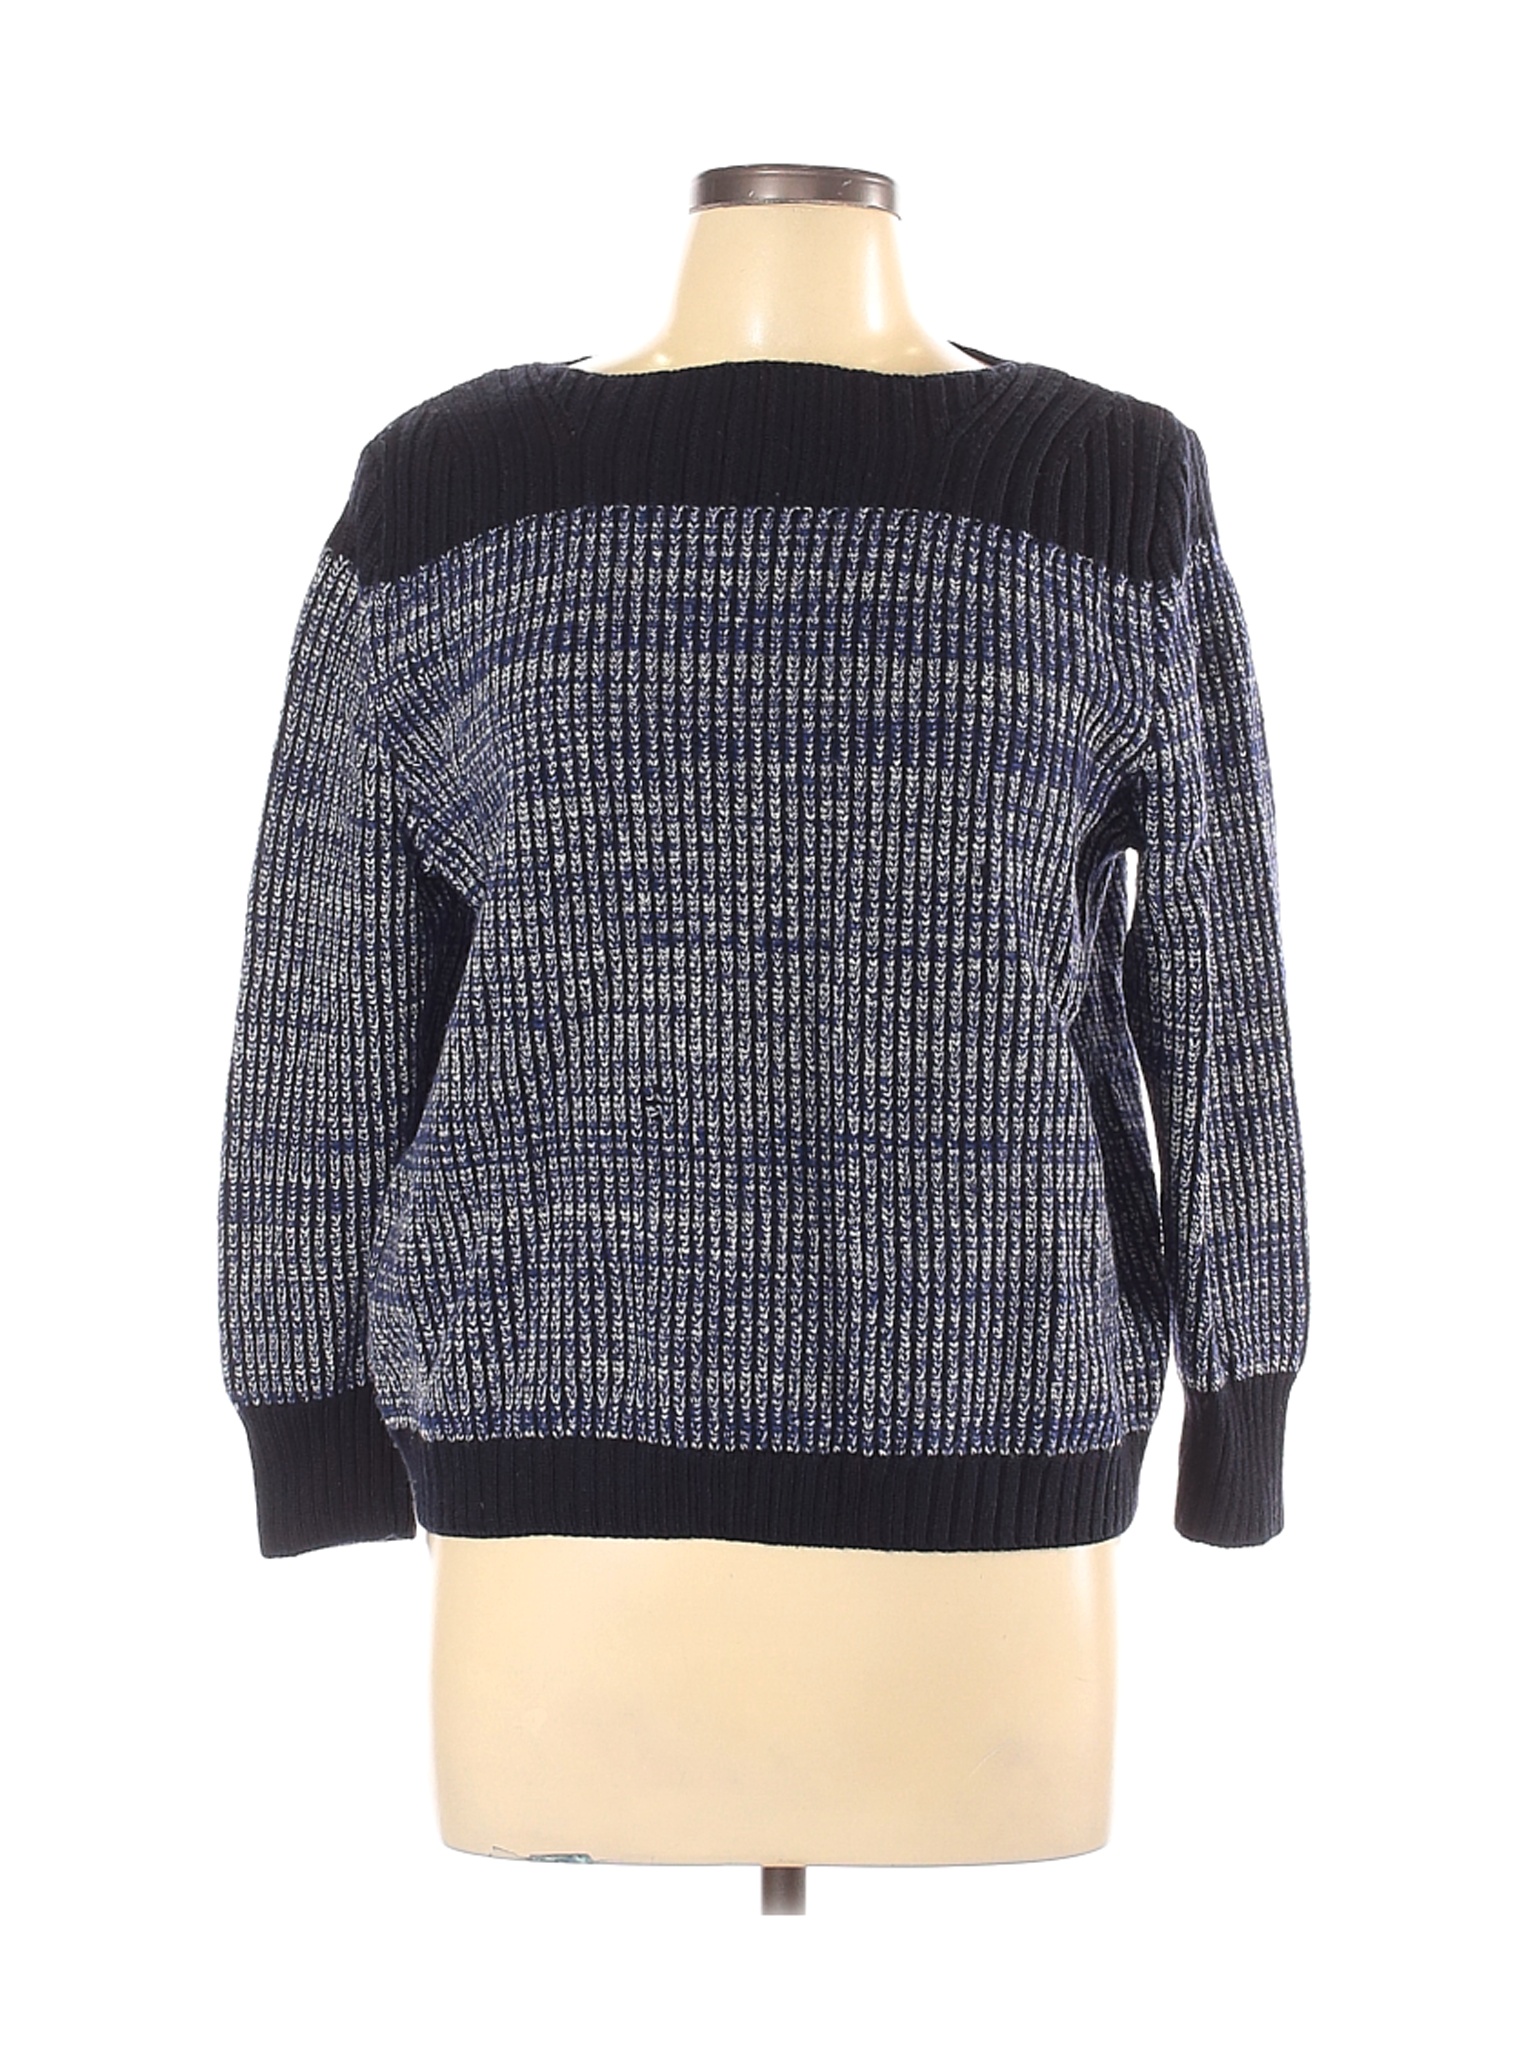 Marc by Marc Jacobs Women Blue Wool Pullover Sweater L | eBay